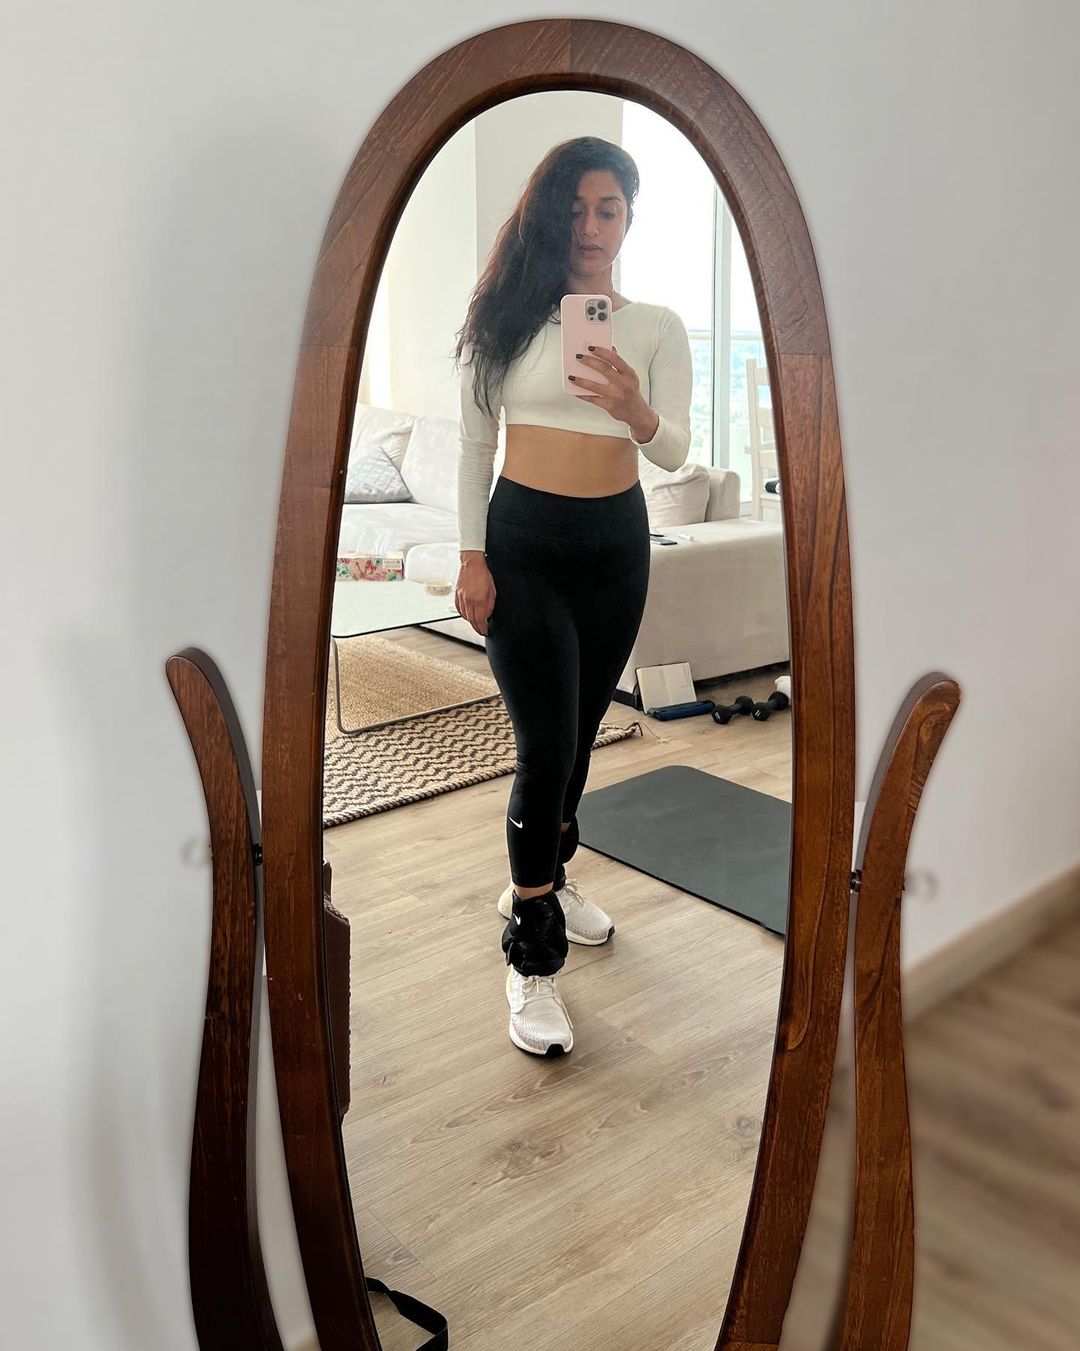 Meera Jasmine mirror selfie 